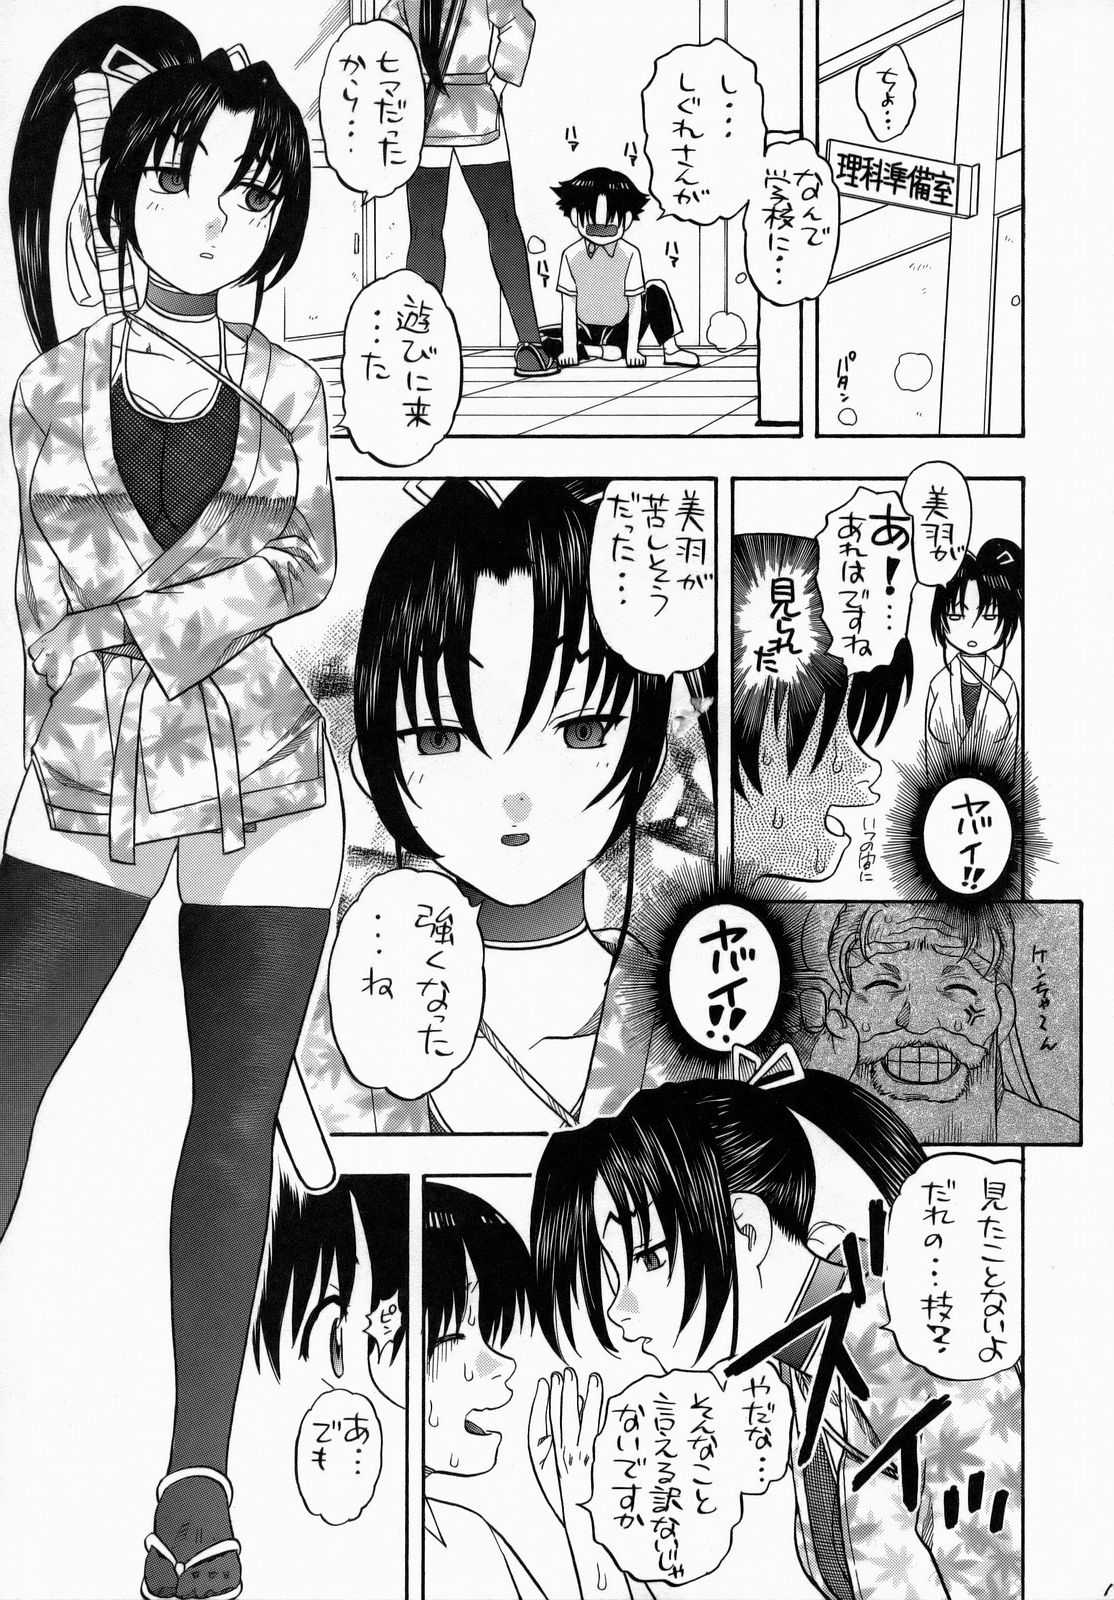 [Studio Wallaby] Shigure and Miyu in School Life (kenichi) 